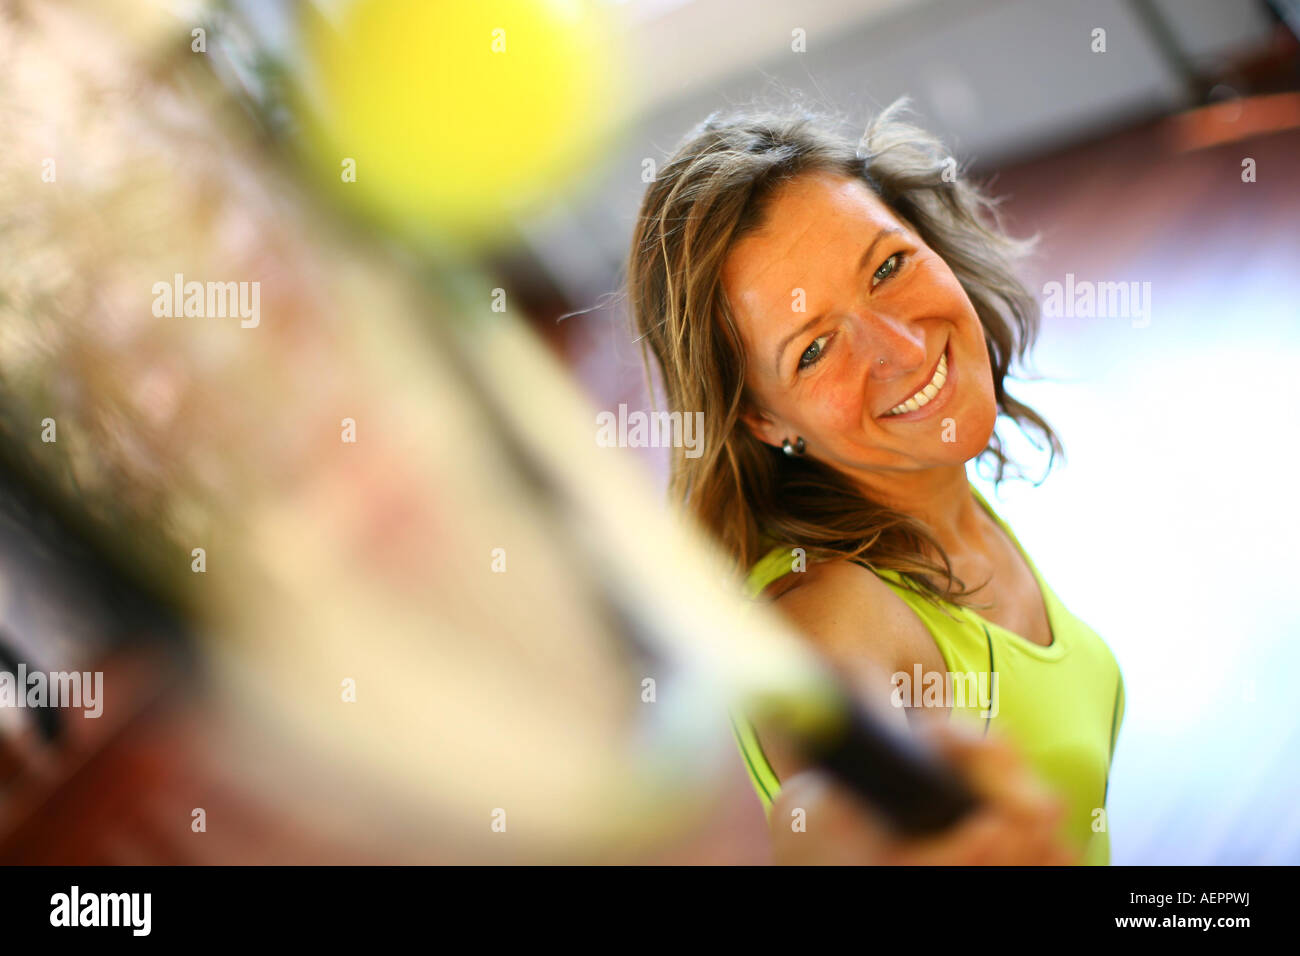 Junge Frau spielt mit Tennisschlaeger und Tennisball , Woman with tennisracket and tennisball Stock Photo